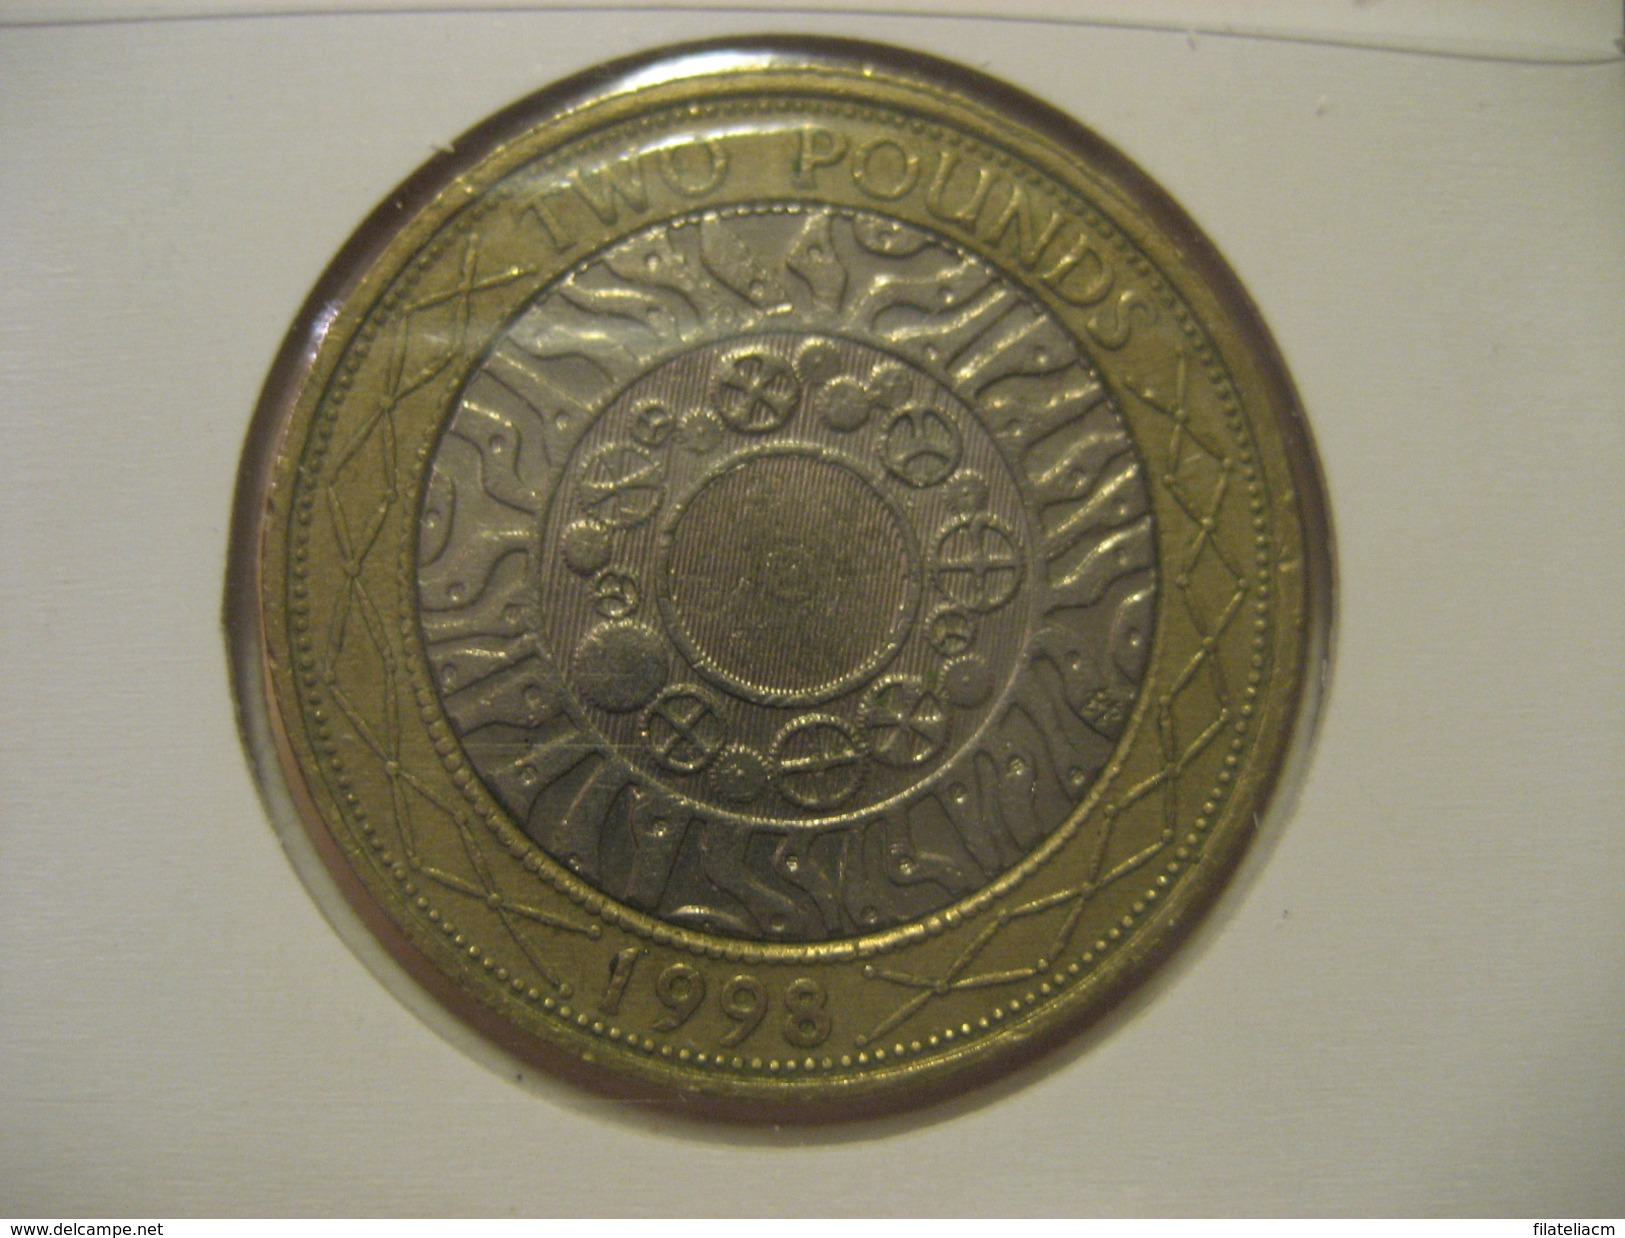 2 Pounds 1998 ENGLAND Great Britain QE II Bimetallic Coin - 2 Pounds